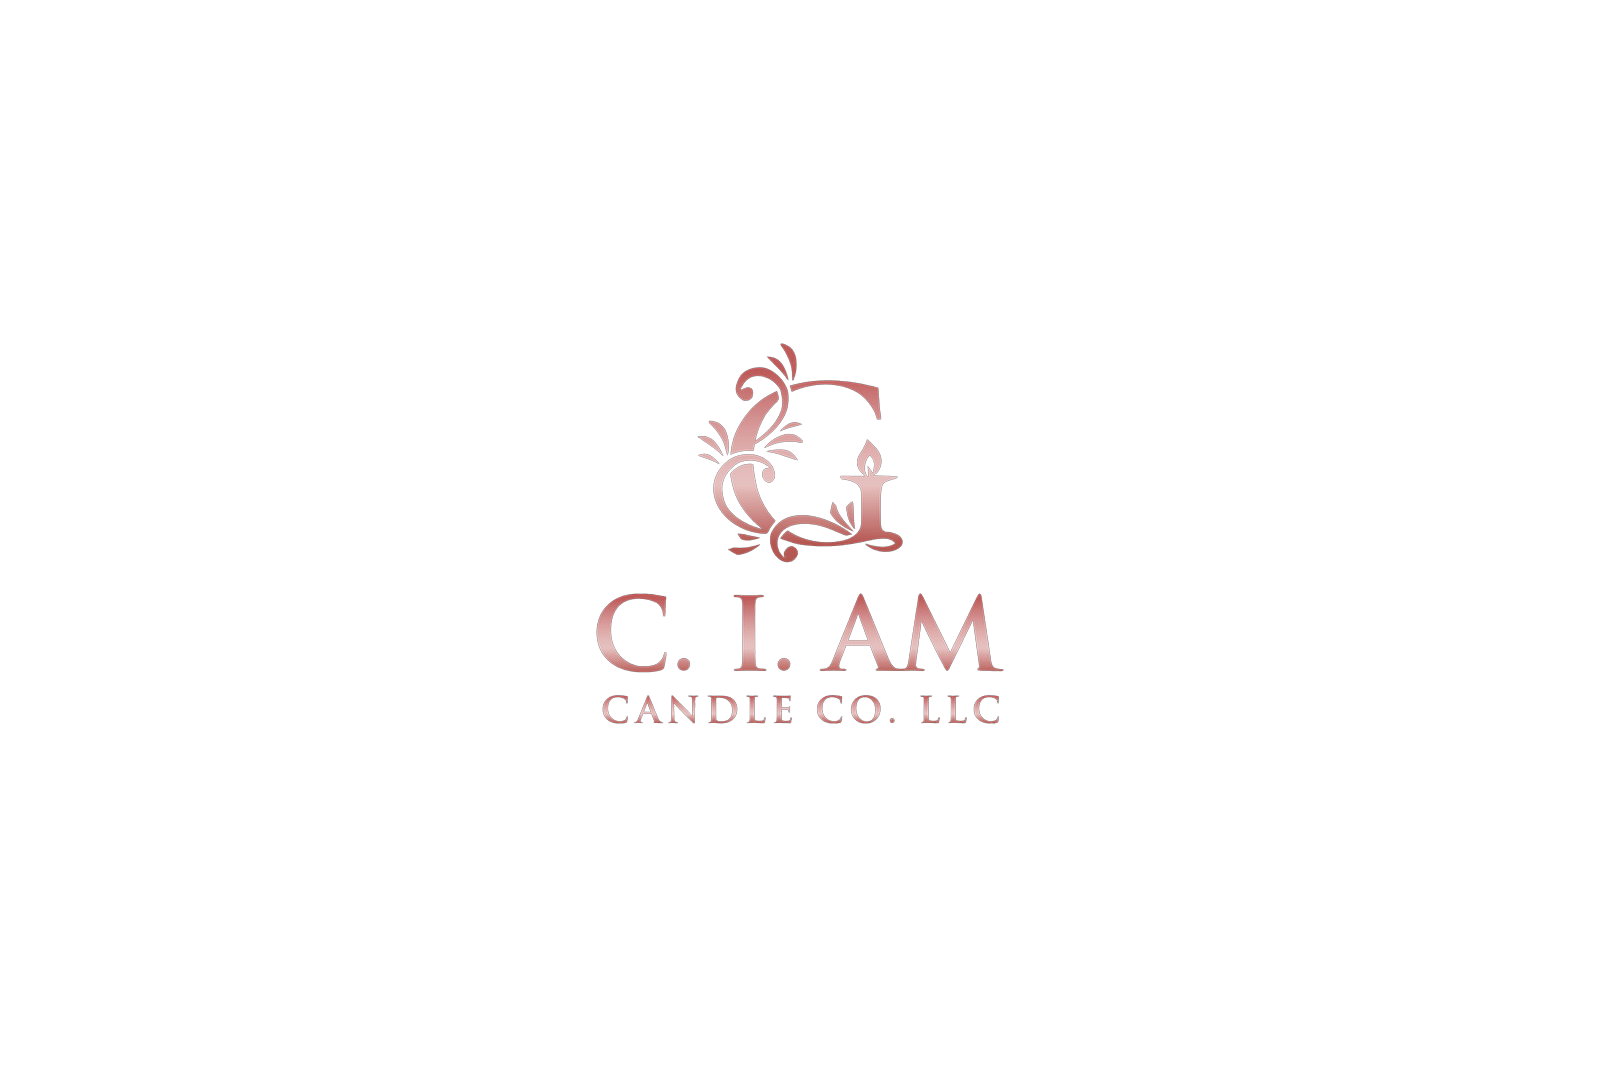 C. I. Am Candle Company